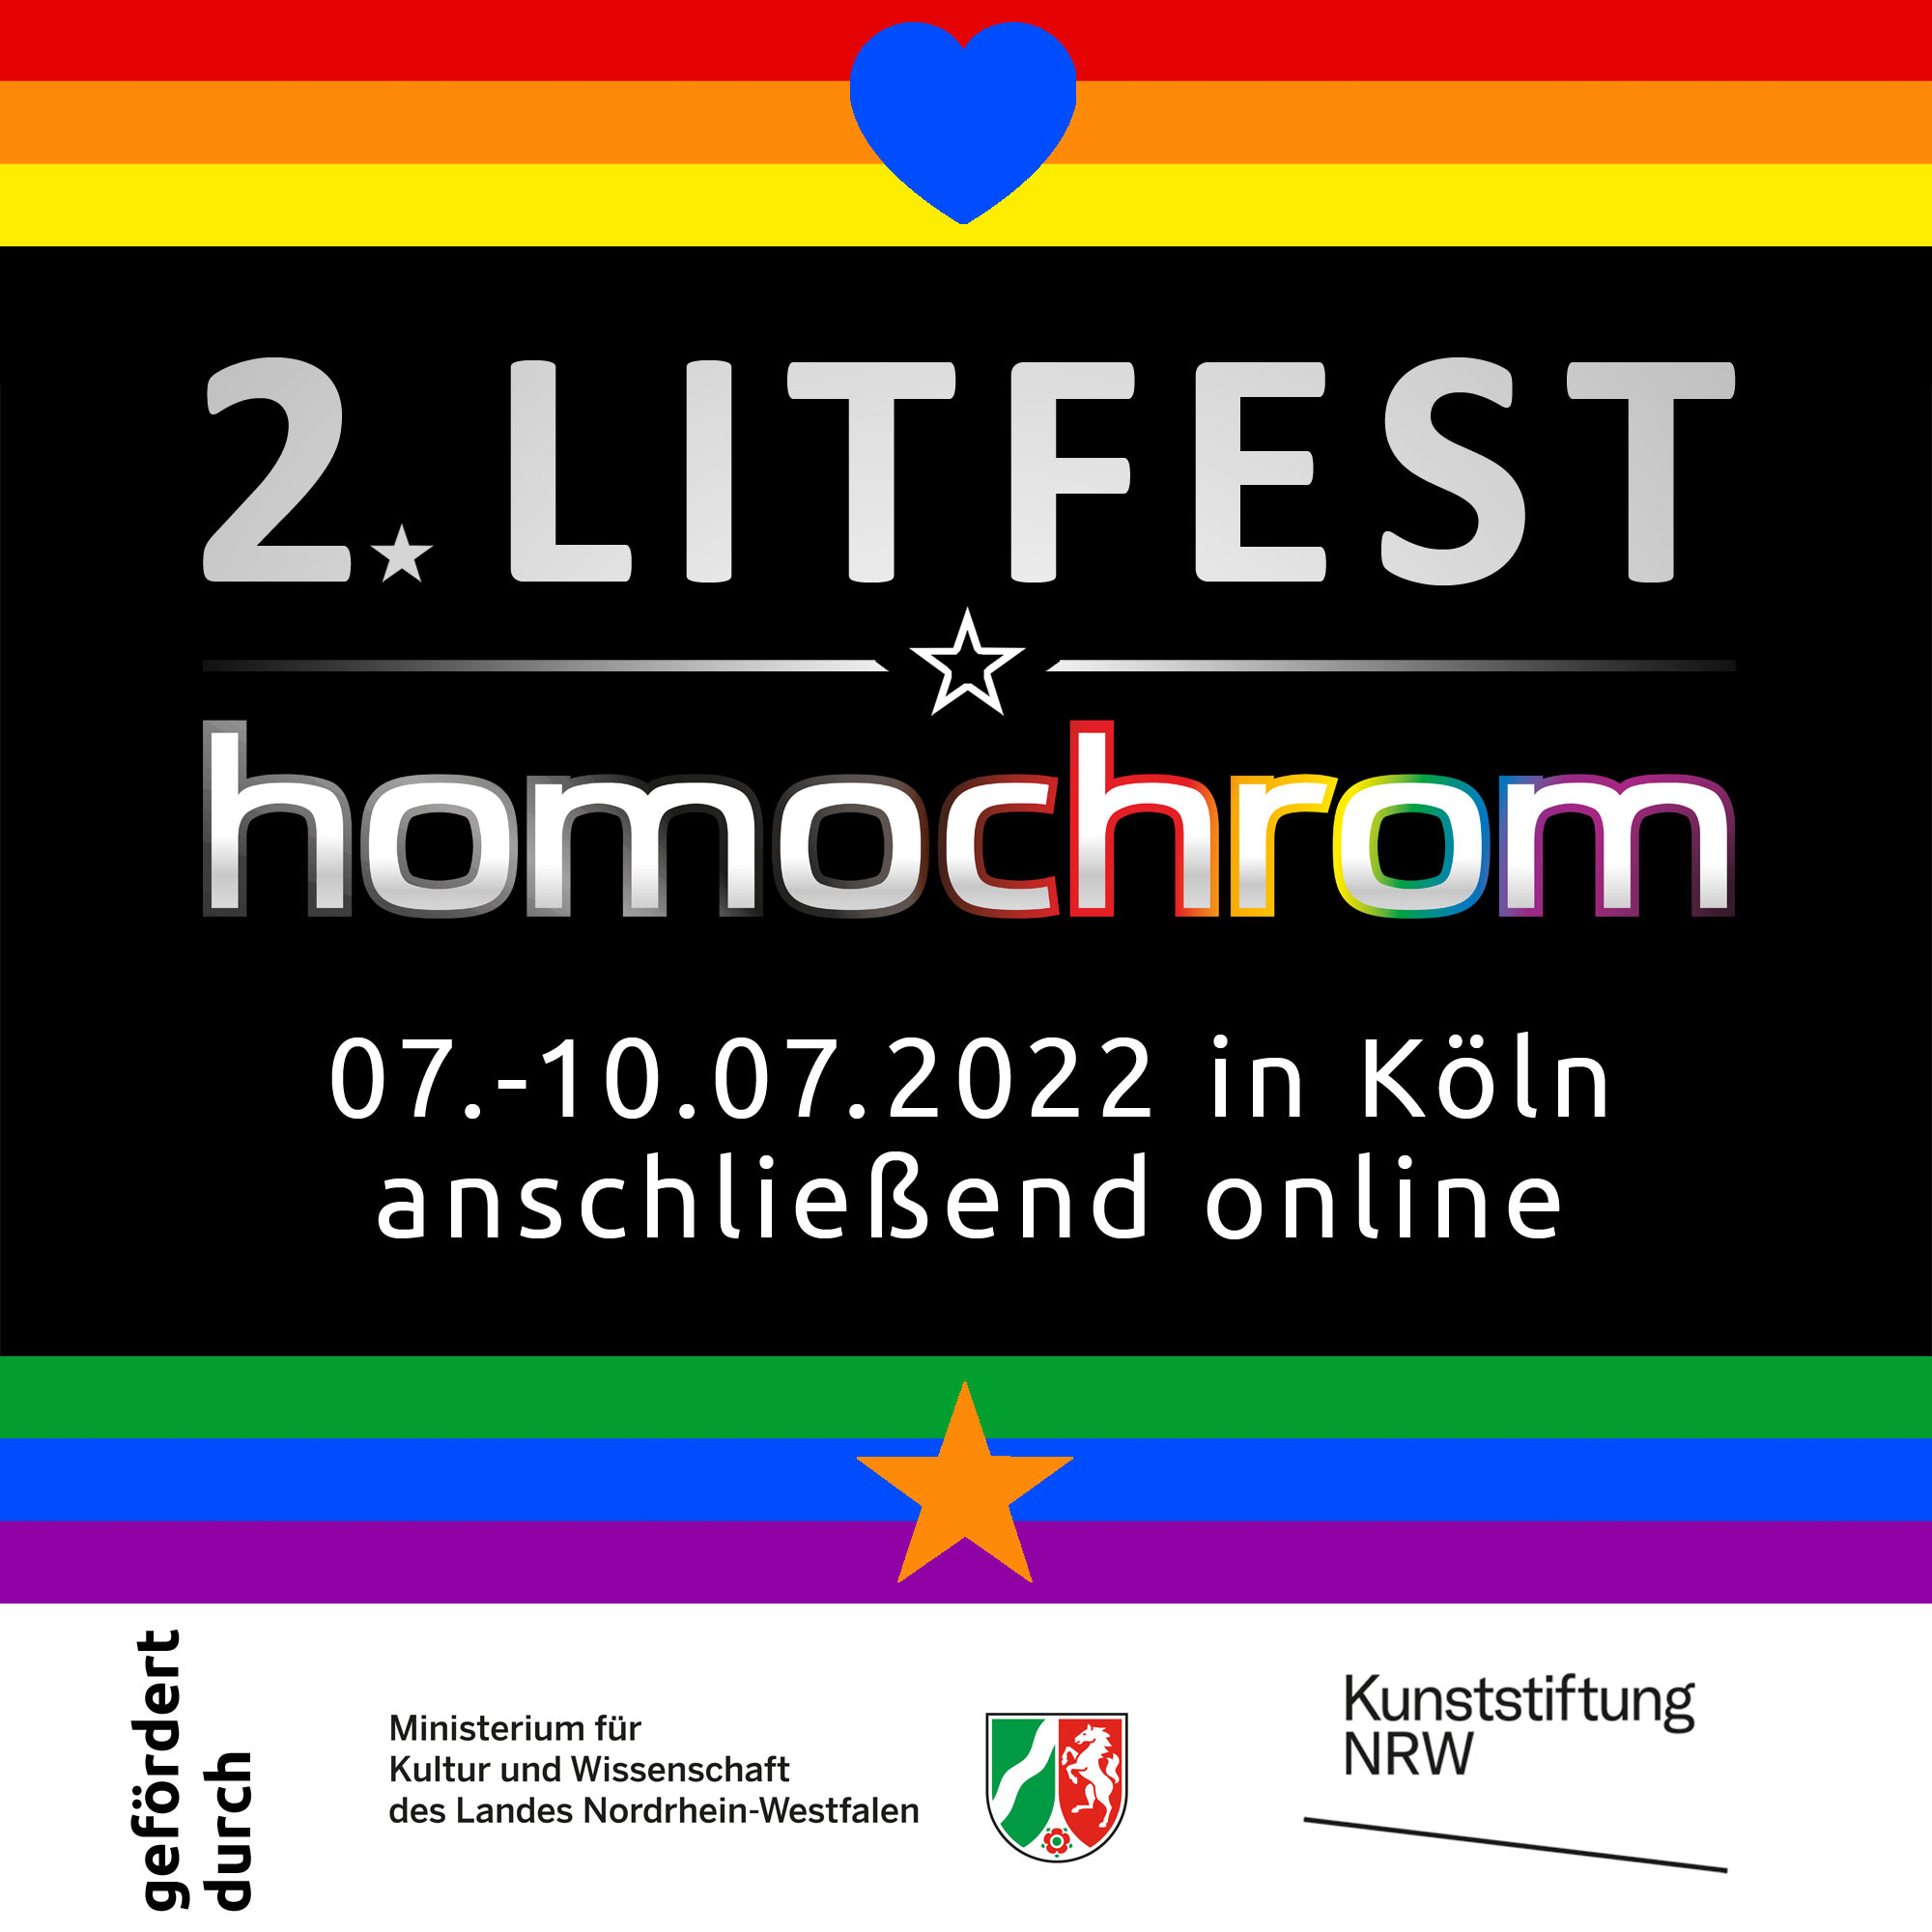 2. Litfest homochrom in Köln